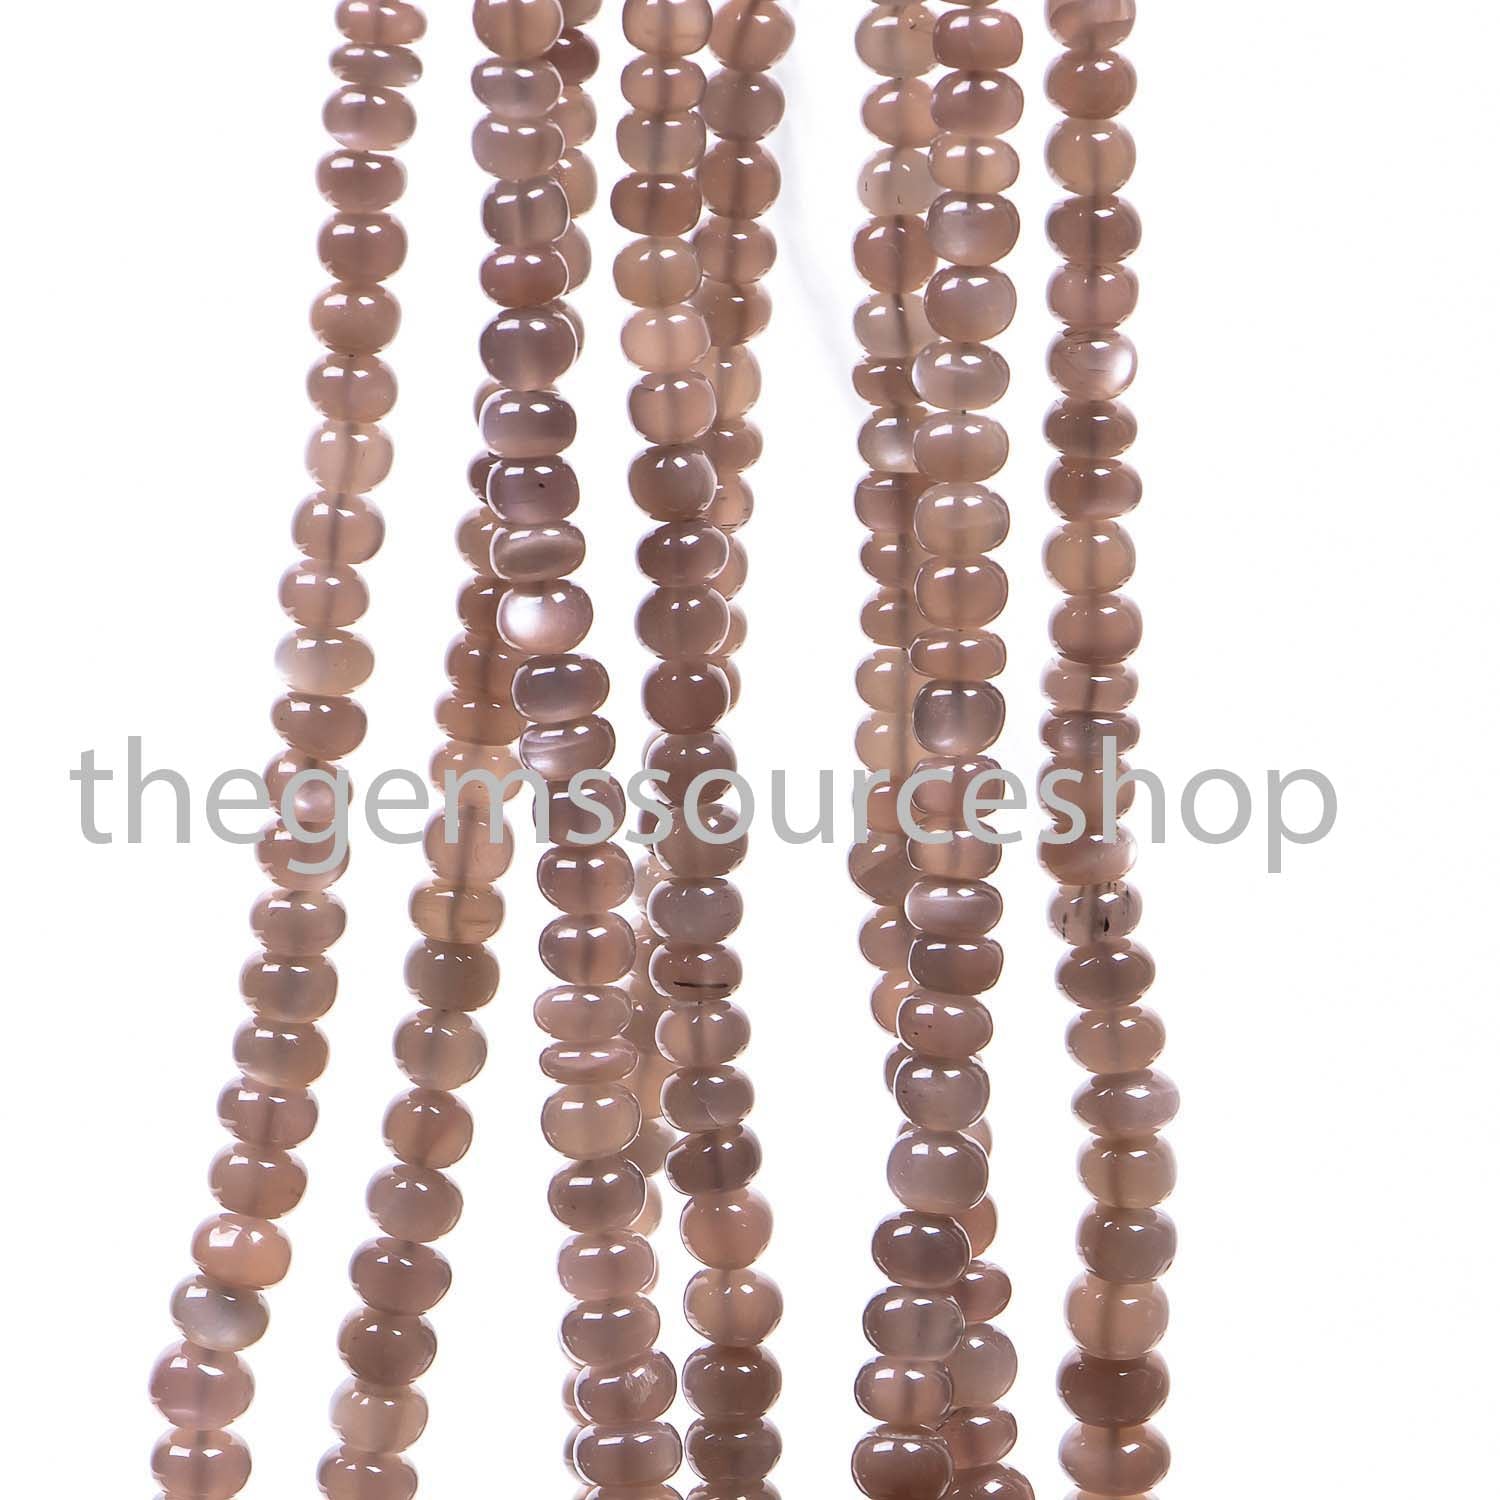 Chocolate Moonstone Beads, Moonstone Smooth Beads, Plain Rondelle Gemstone Beads